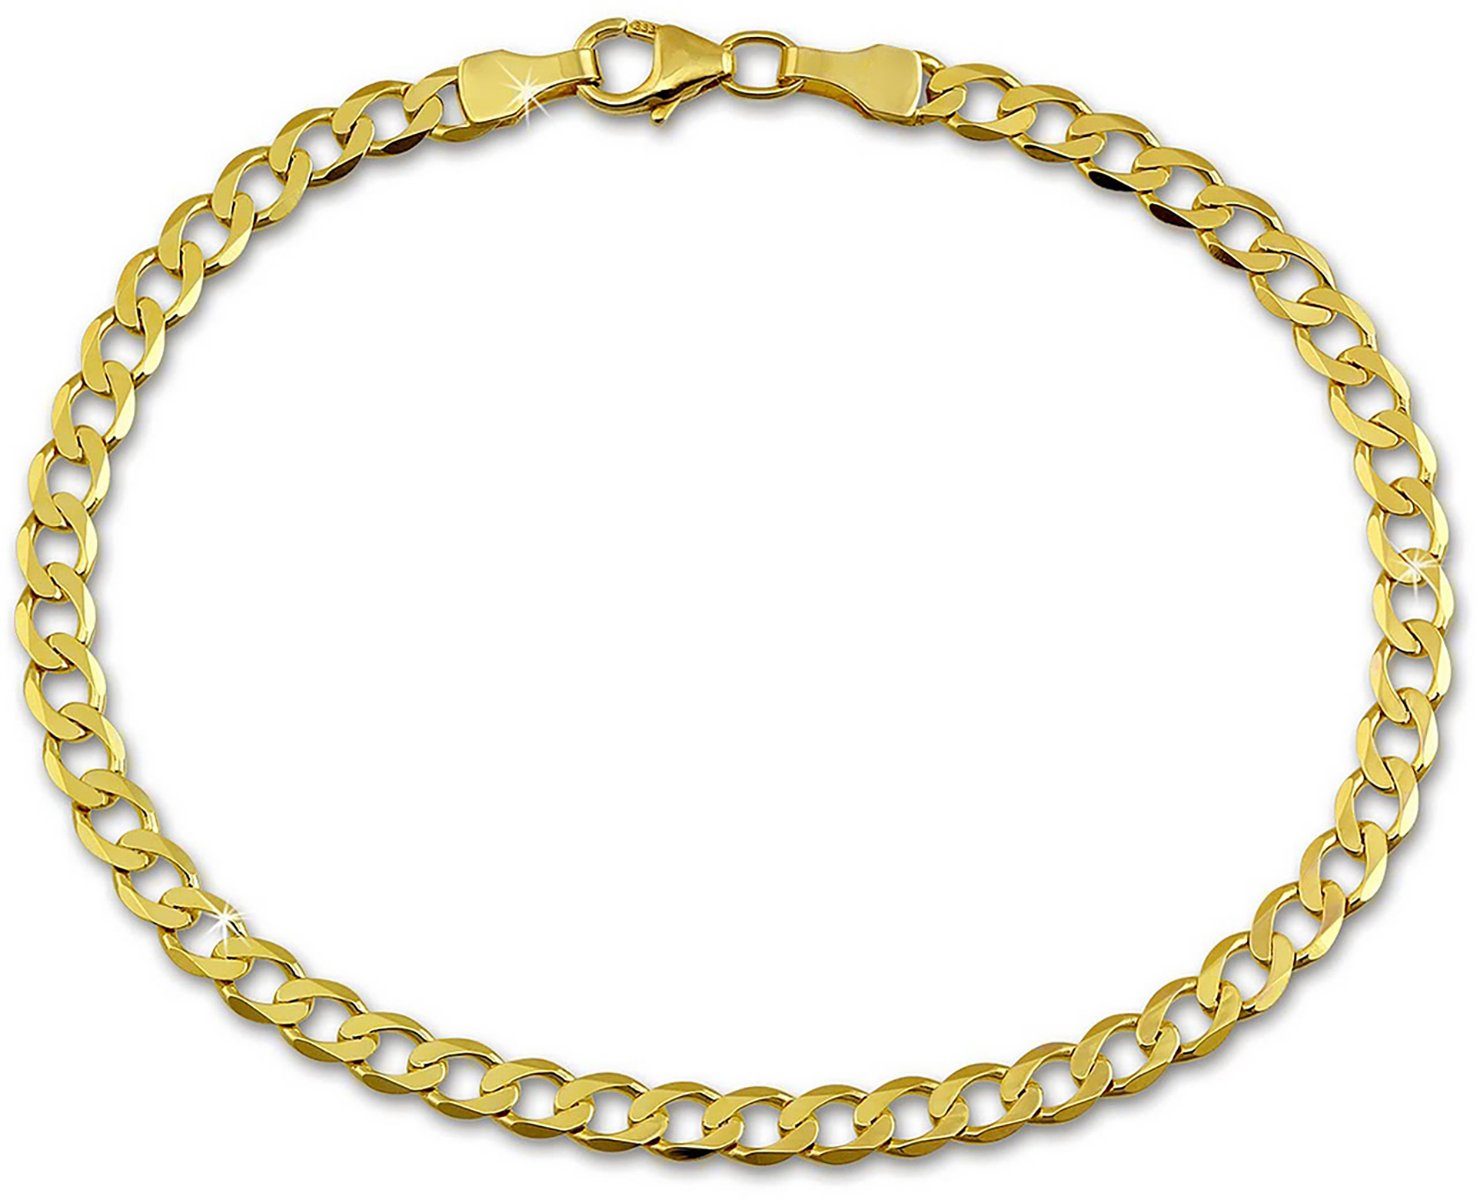 GoldDream Goldarmband GoldDream - Damen Herren 333 19cm 8 Farbe Karat, 19cm, Gelbgold (Panzer) (Armband), Damen, Herren Armband ca. Armband